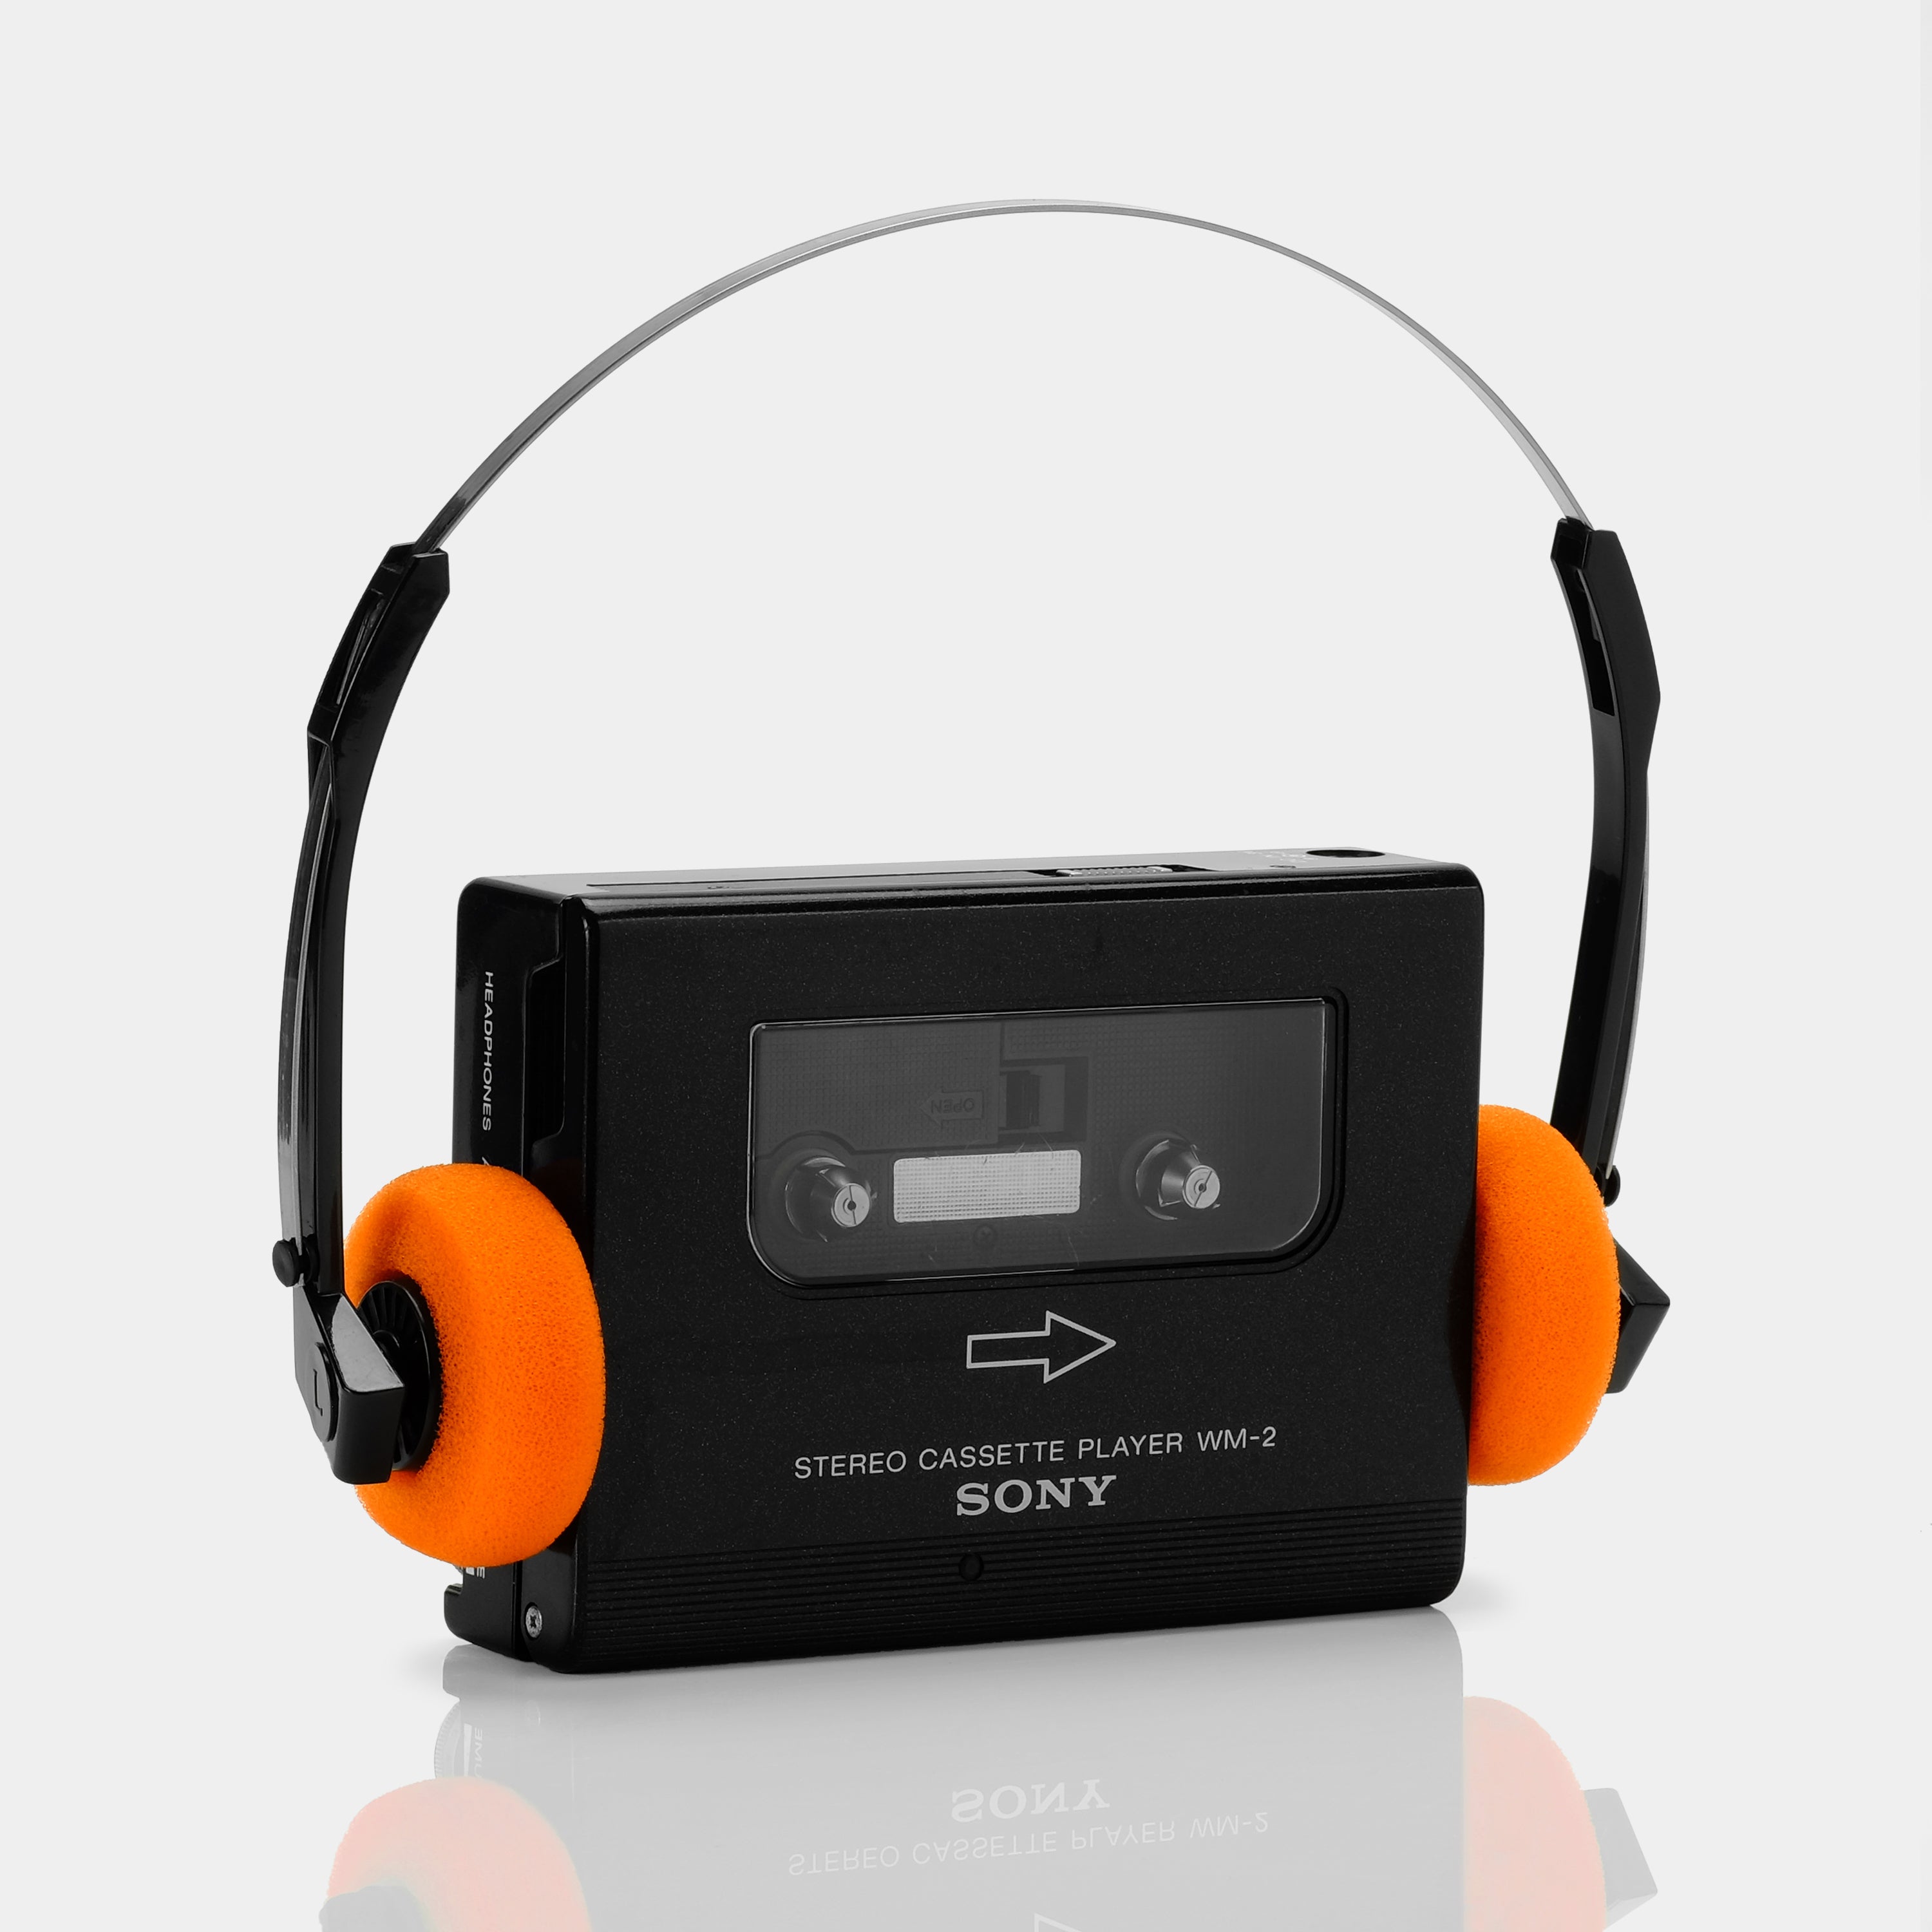 Sony Walkman WM-2 Portable Cassette Player